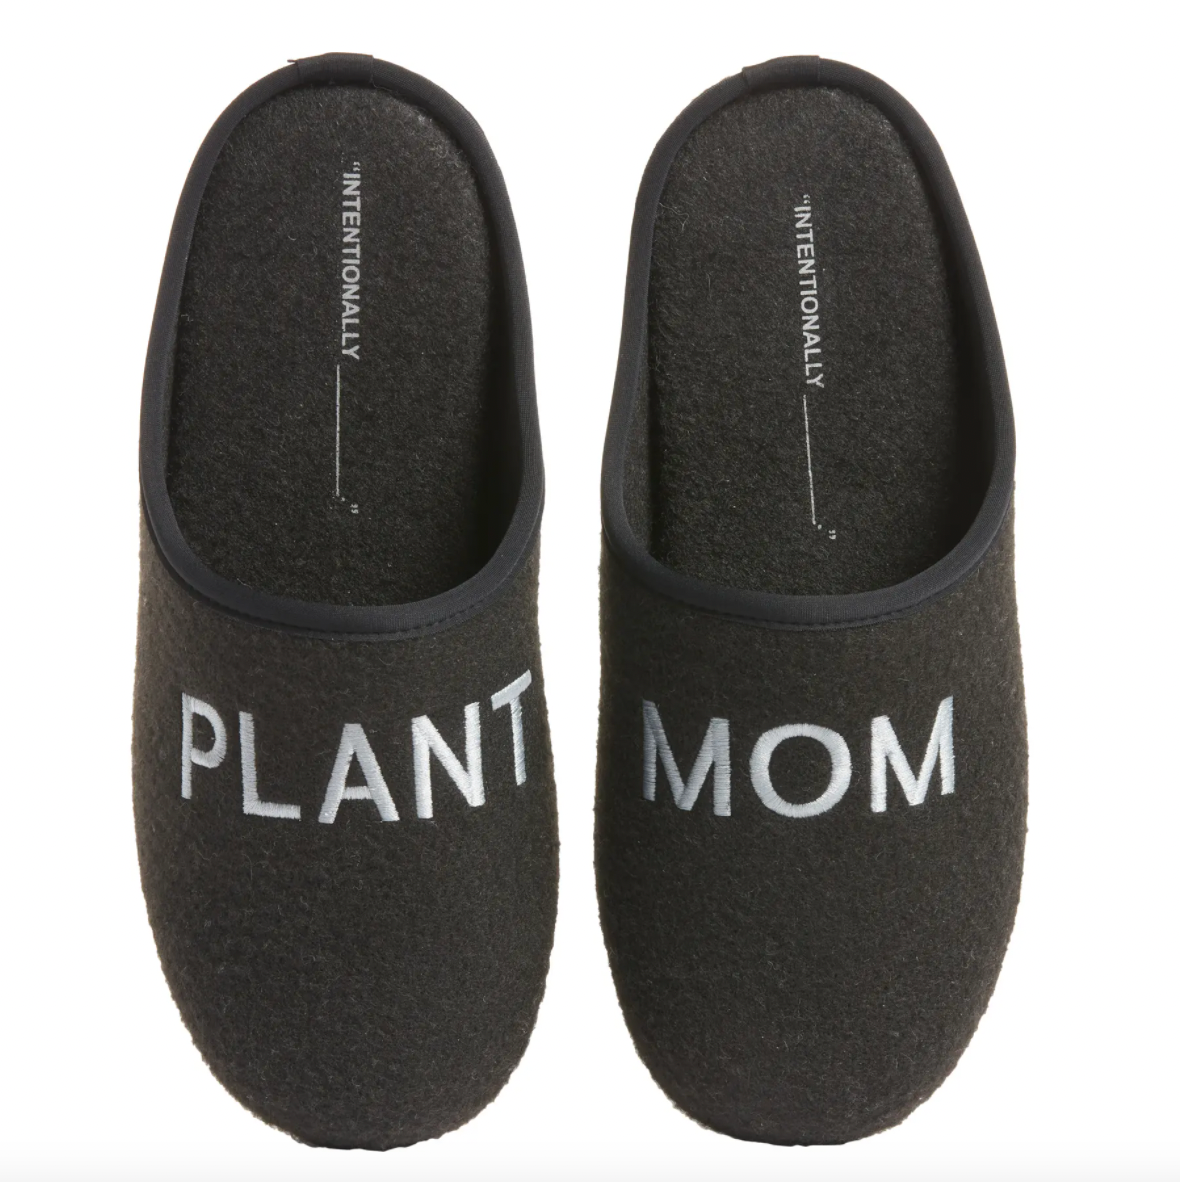 Plant Mom Slipper